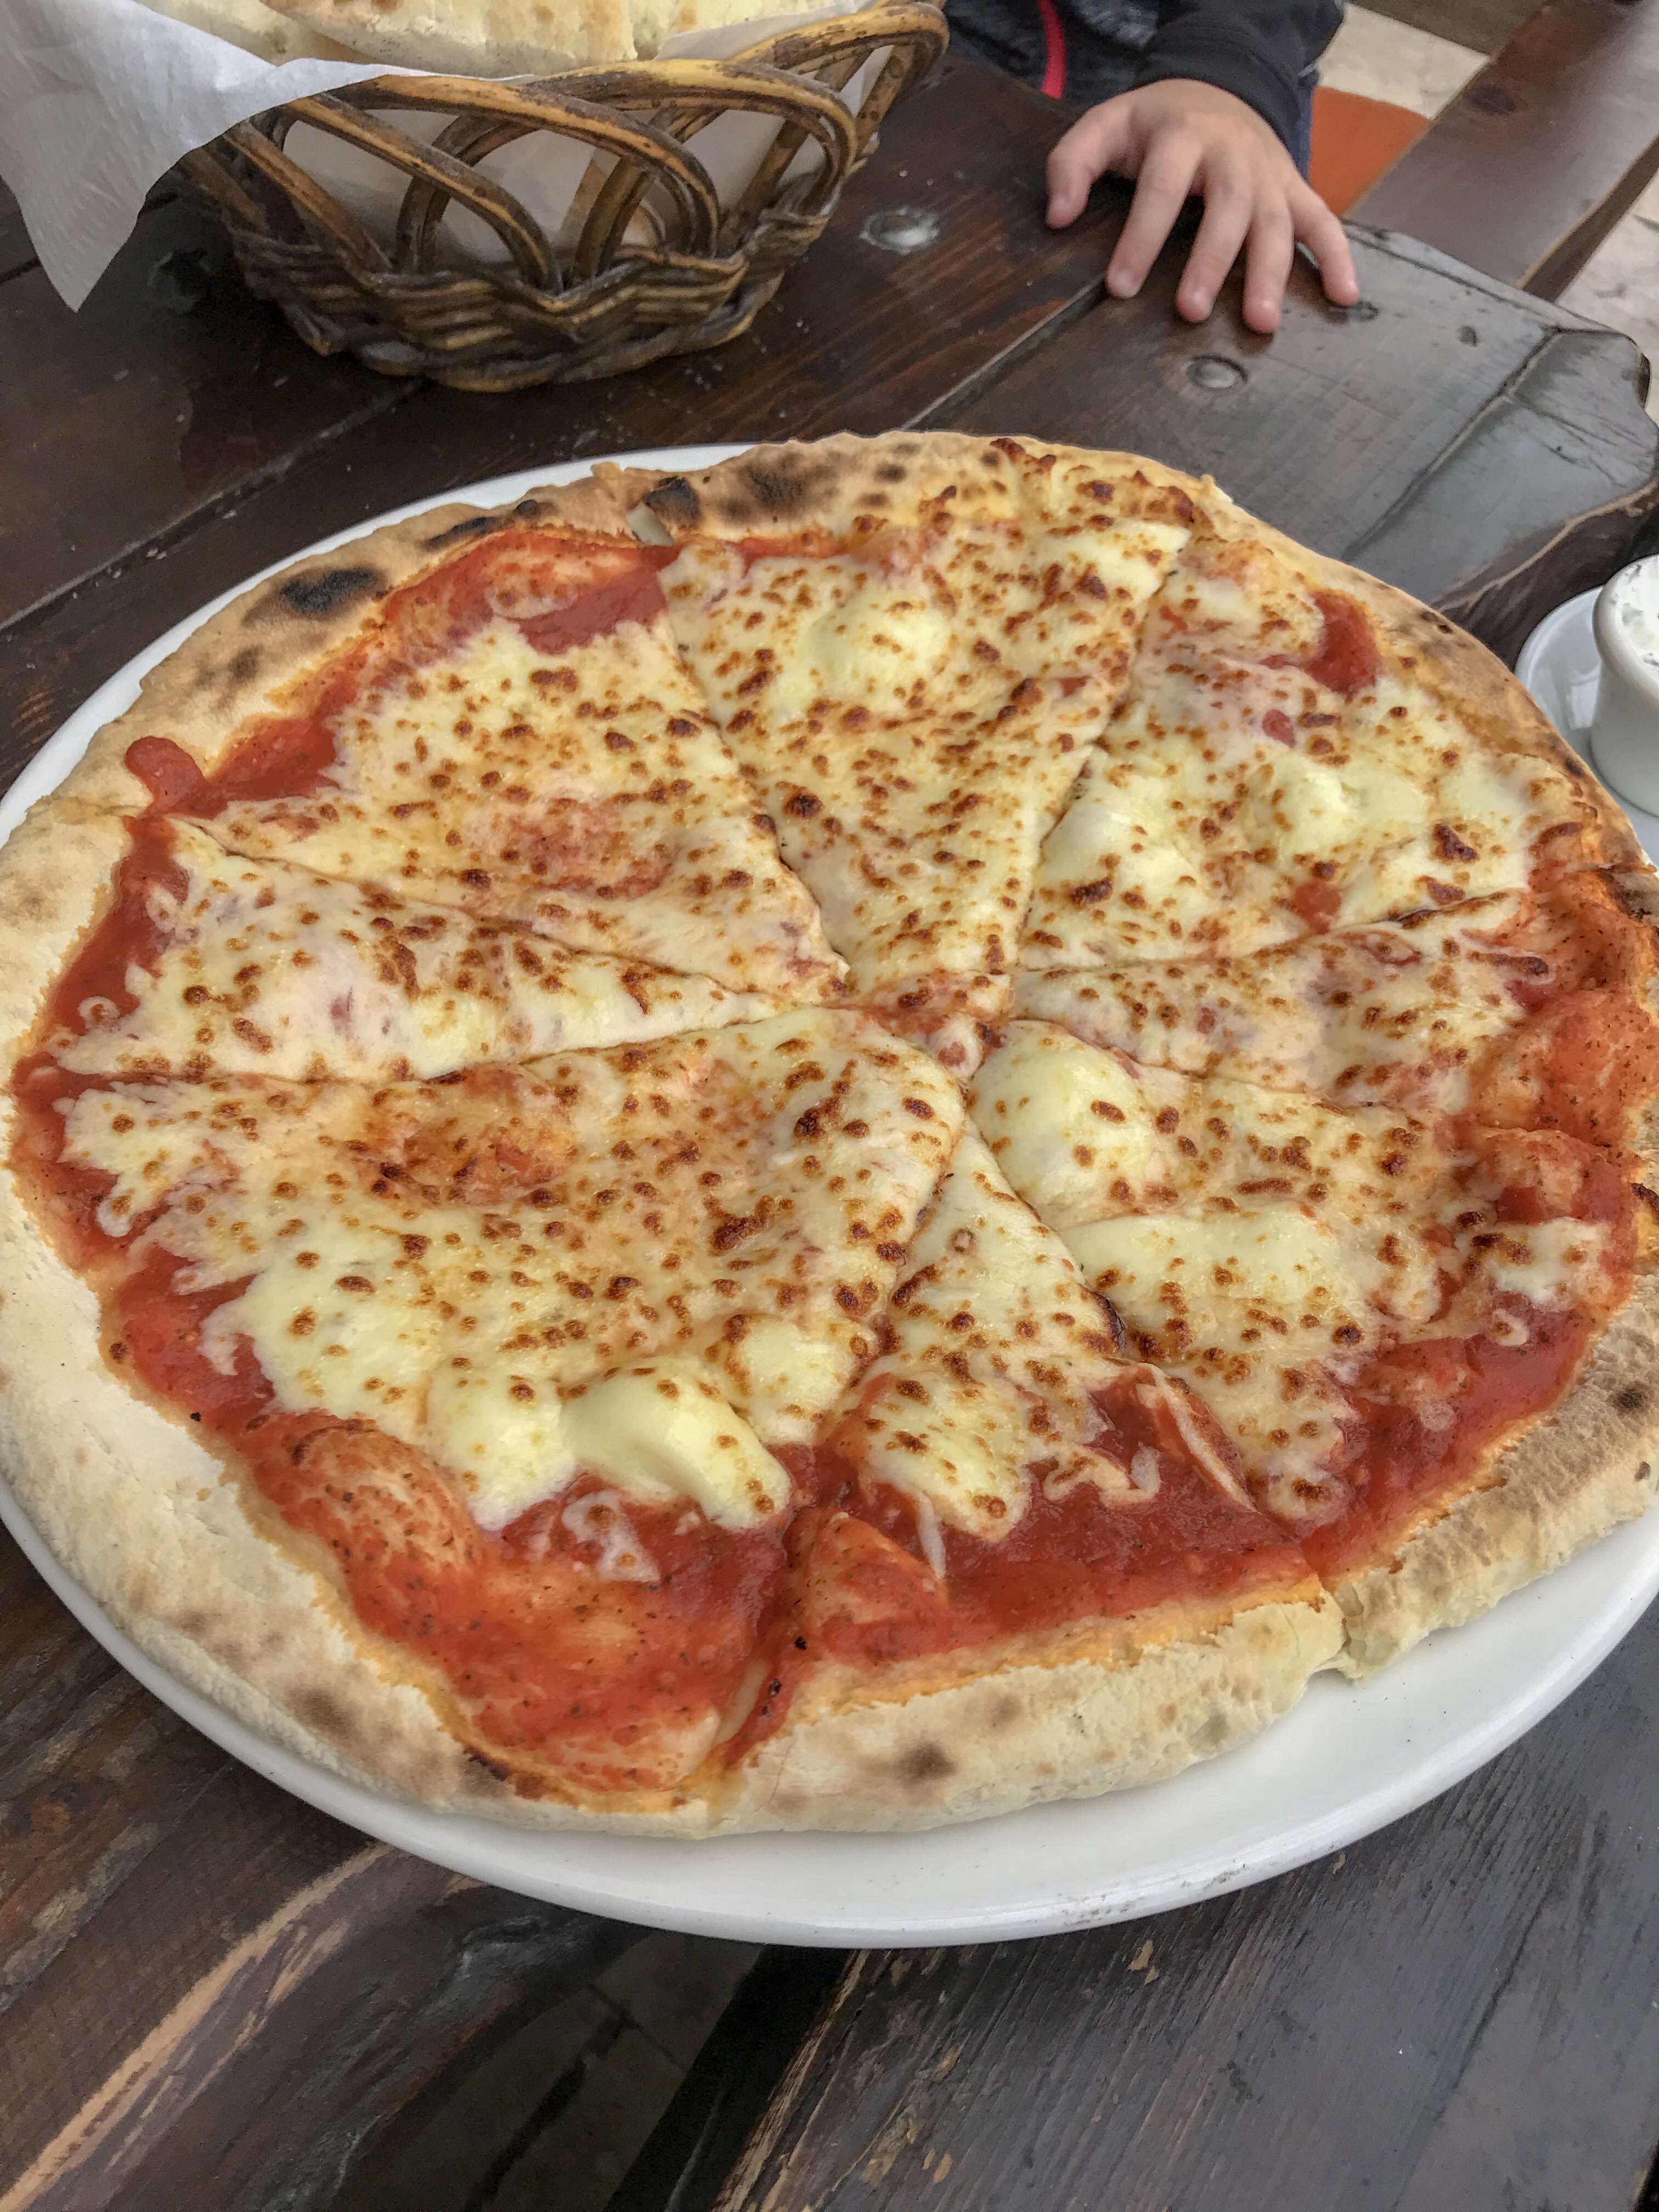 Pizza - found in a restaurant in Jordan